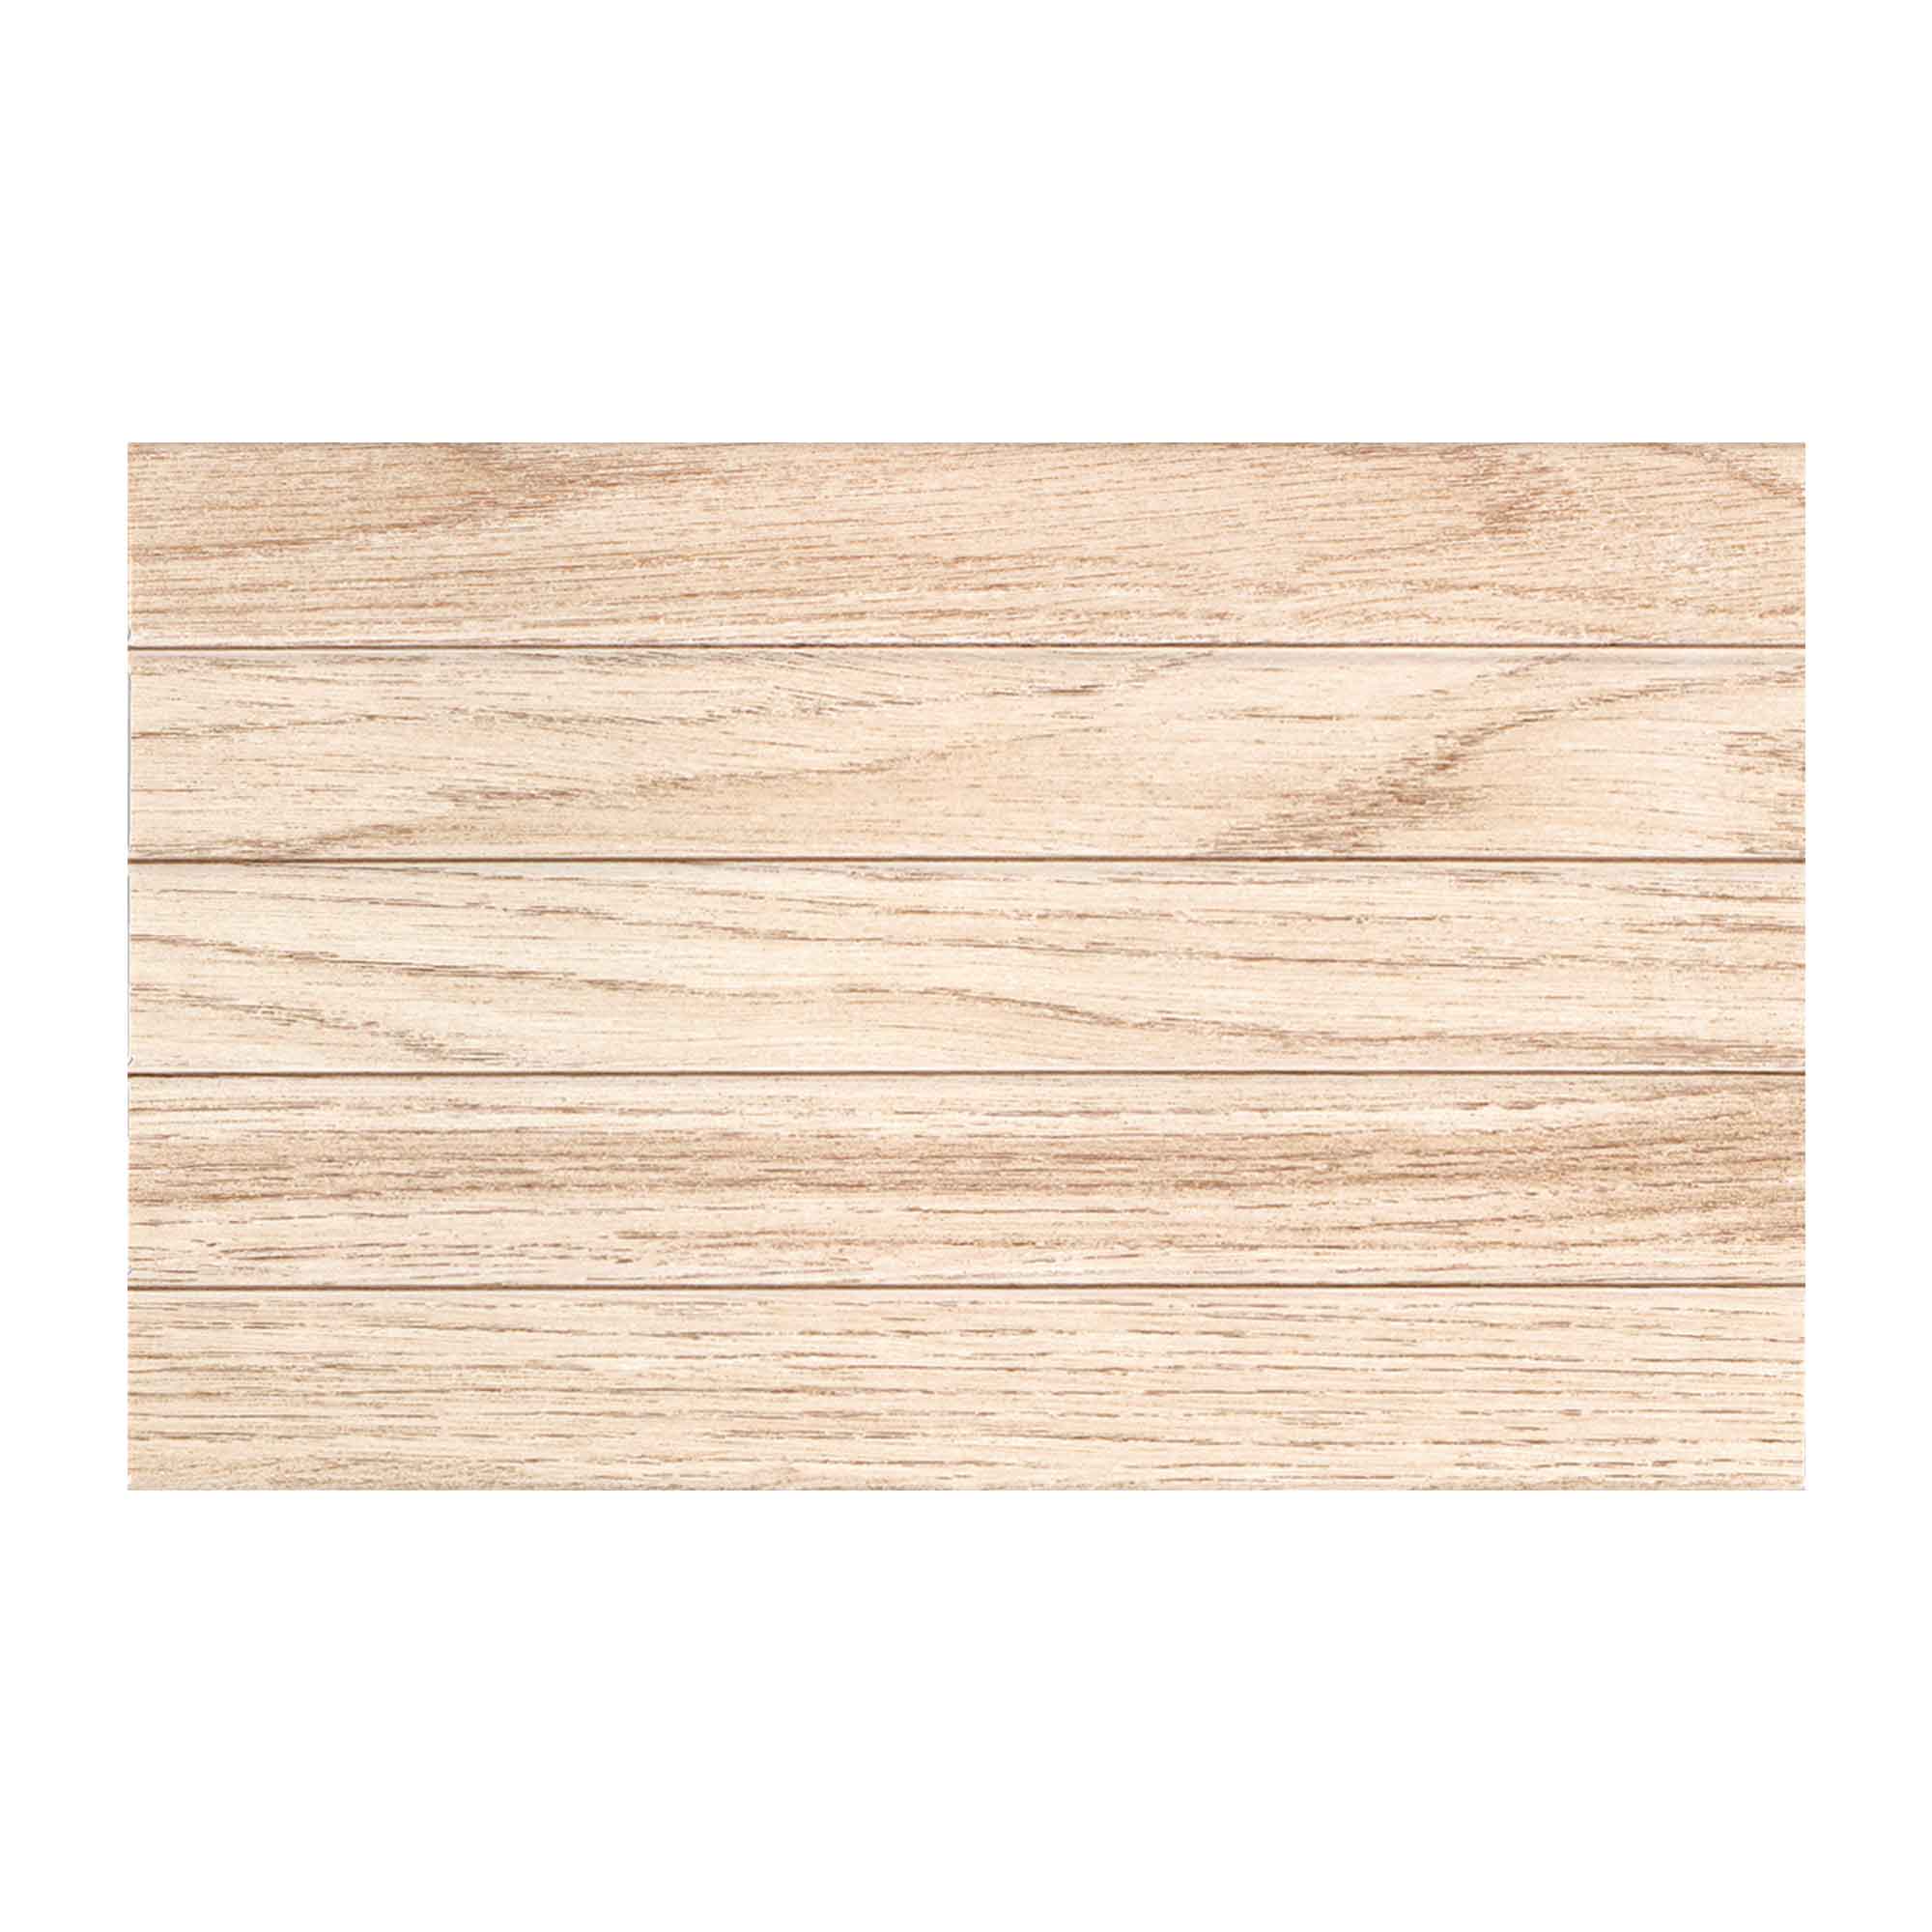 Faianta baie glazurata Cesarom Nordic Wood, bej stralucitor, lucios, aspect de lemn, 40.2 x 25.2 cm 25.2